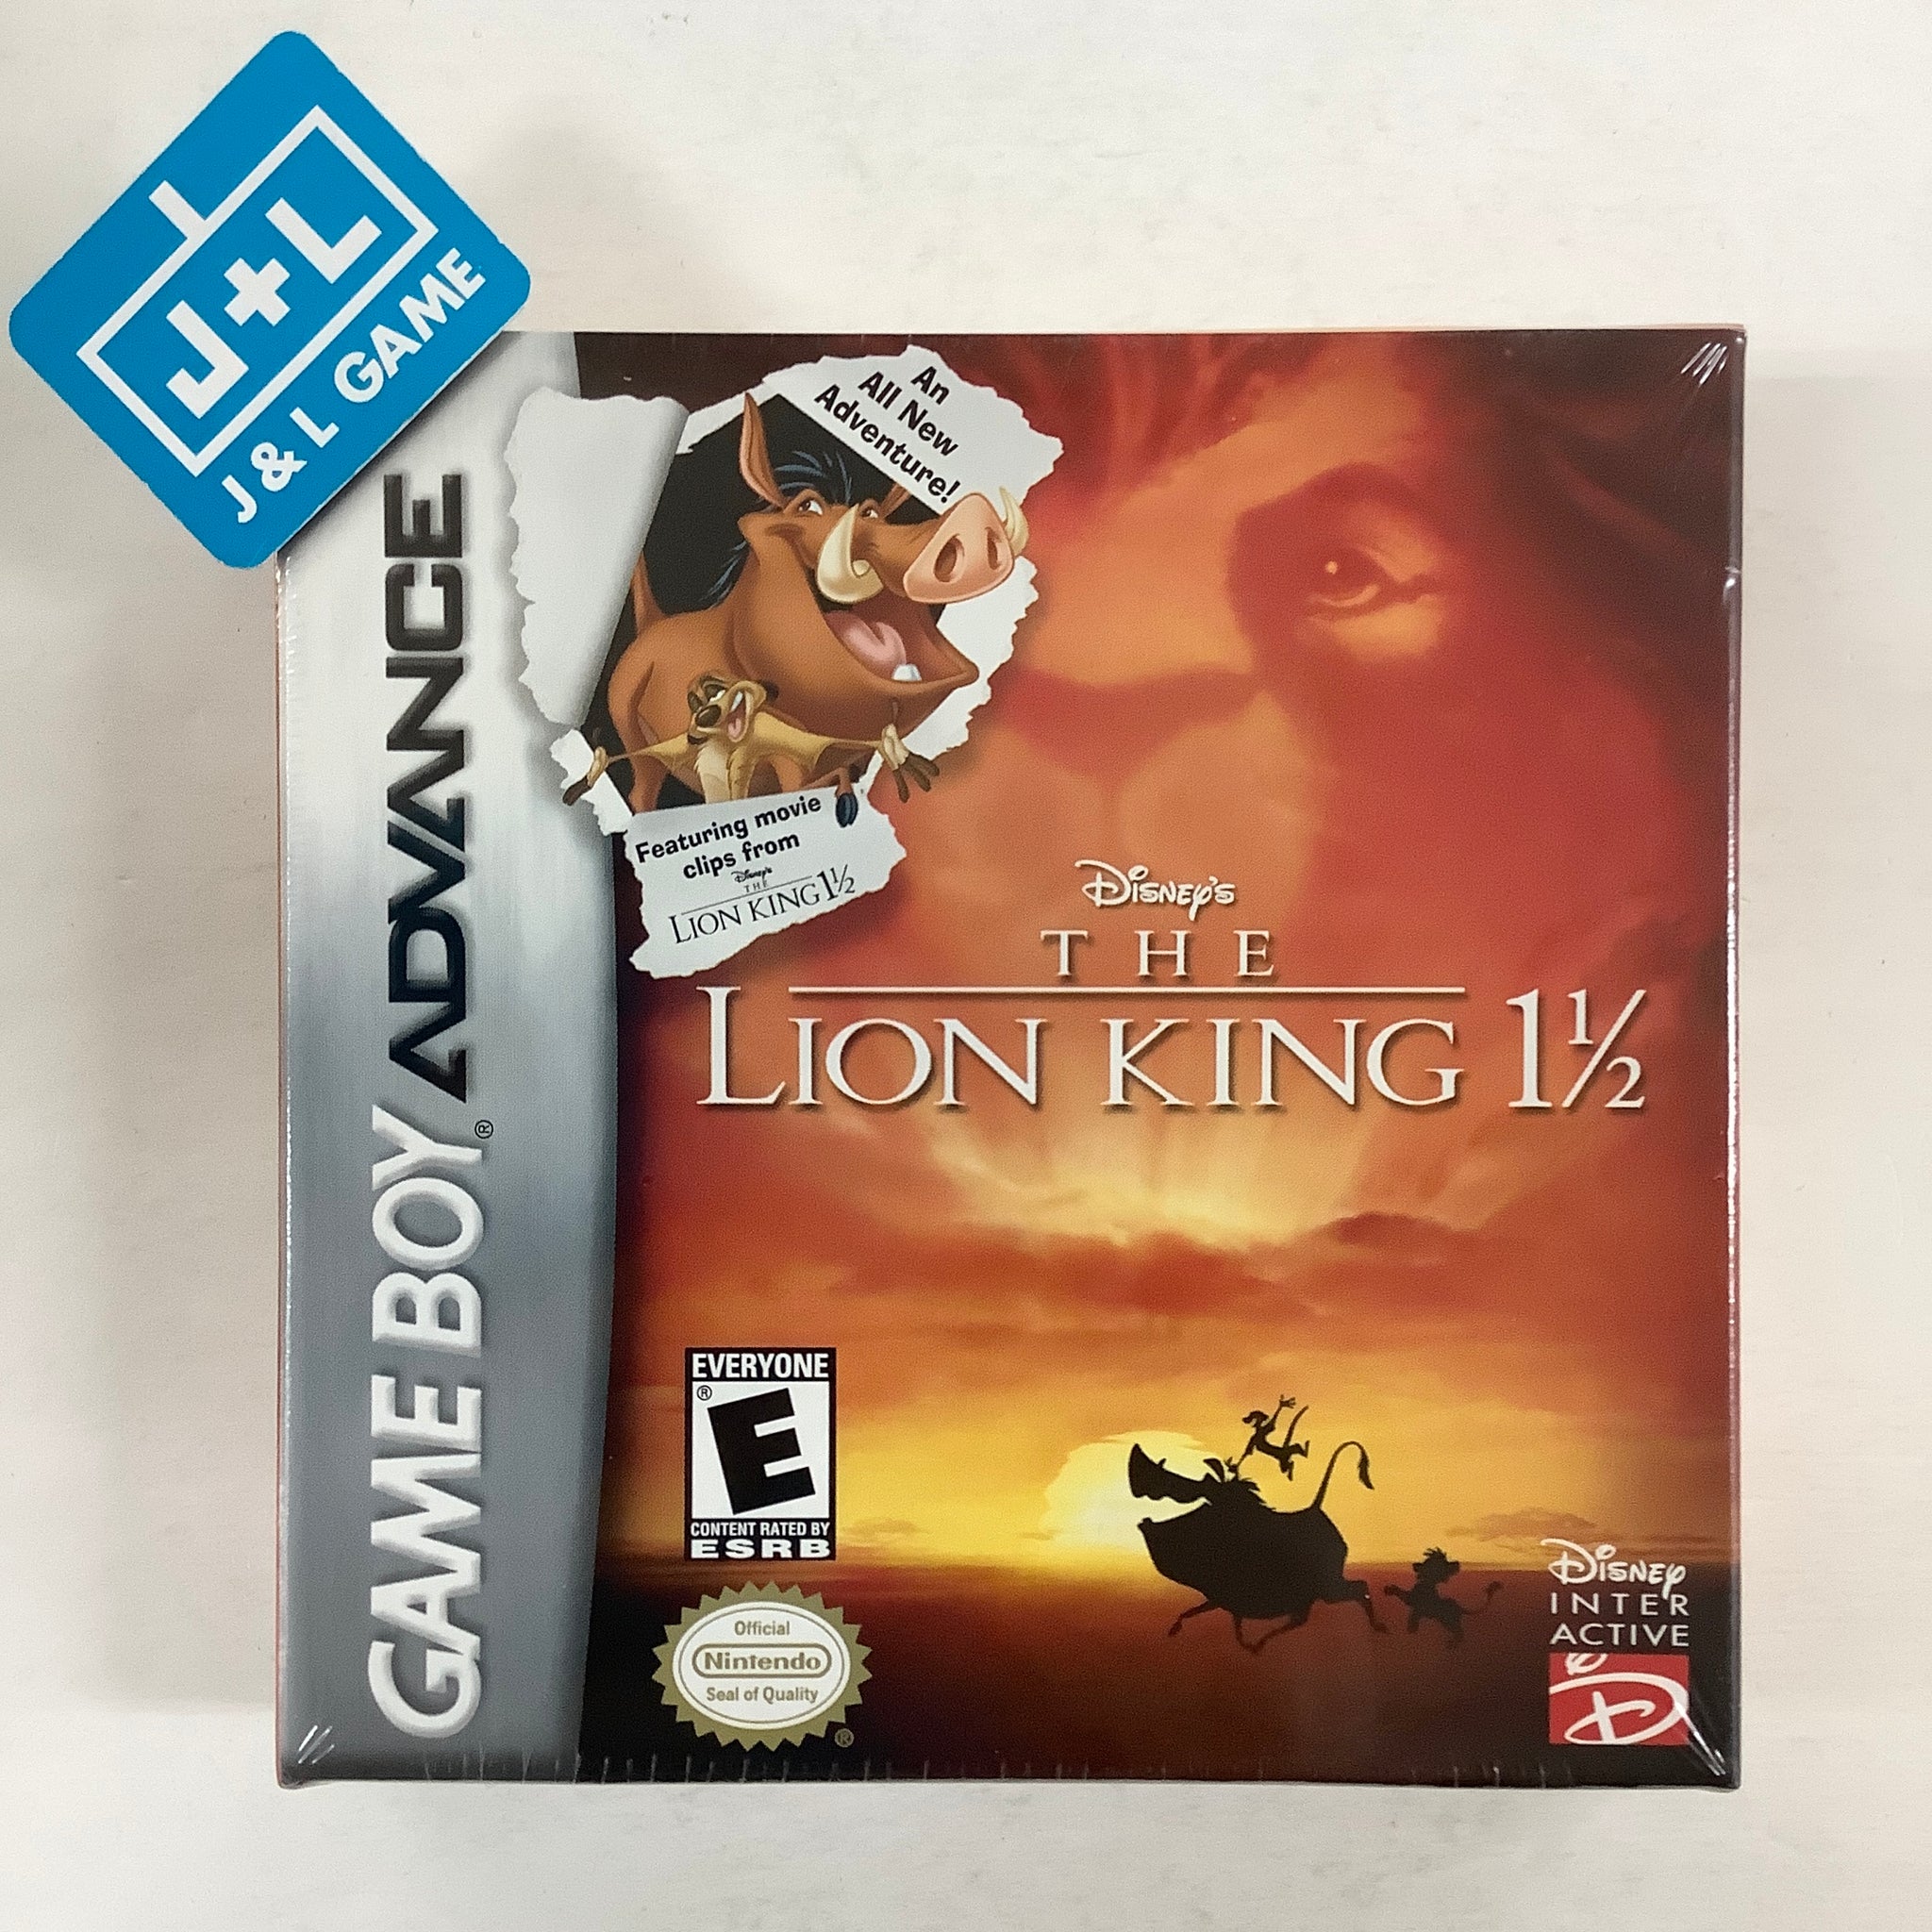 Disney's The Lion King 1 1/2 - (GBA) Game Boy Advance Video Games Disney Interactive   